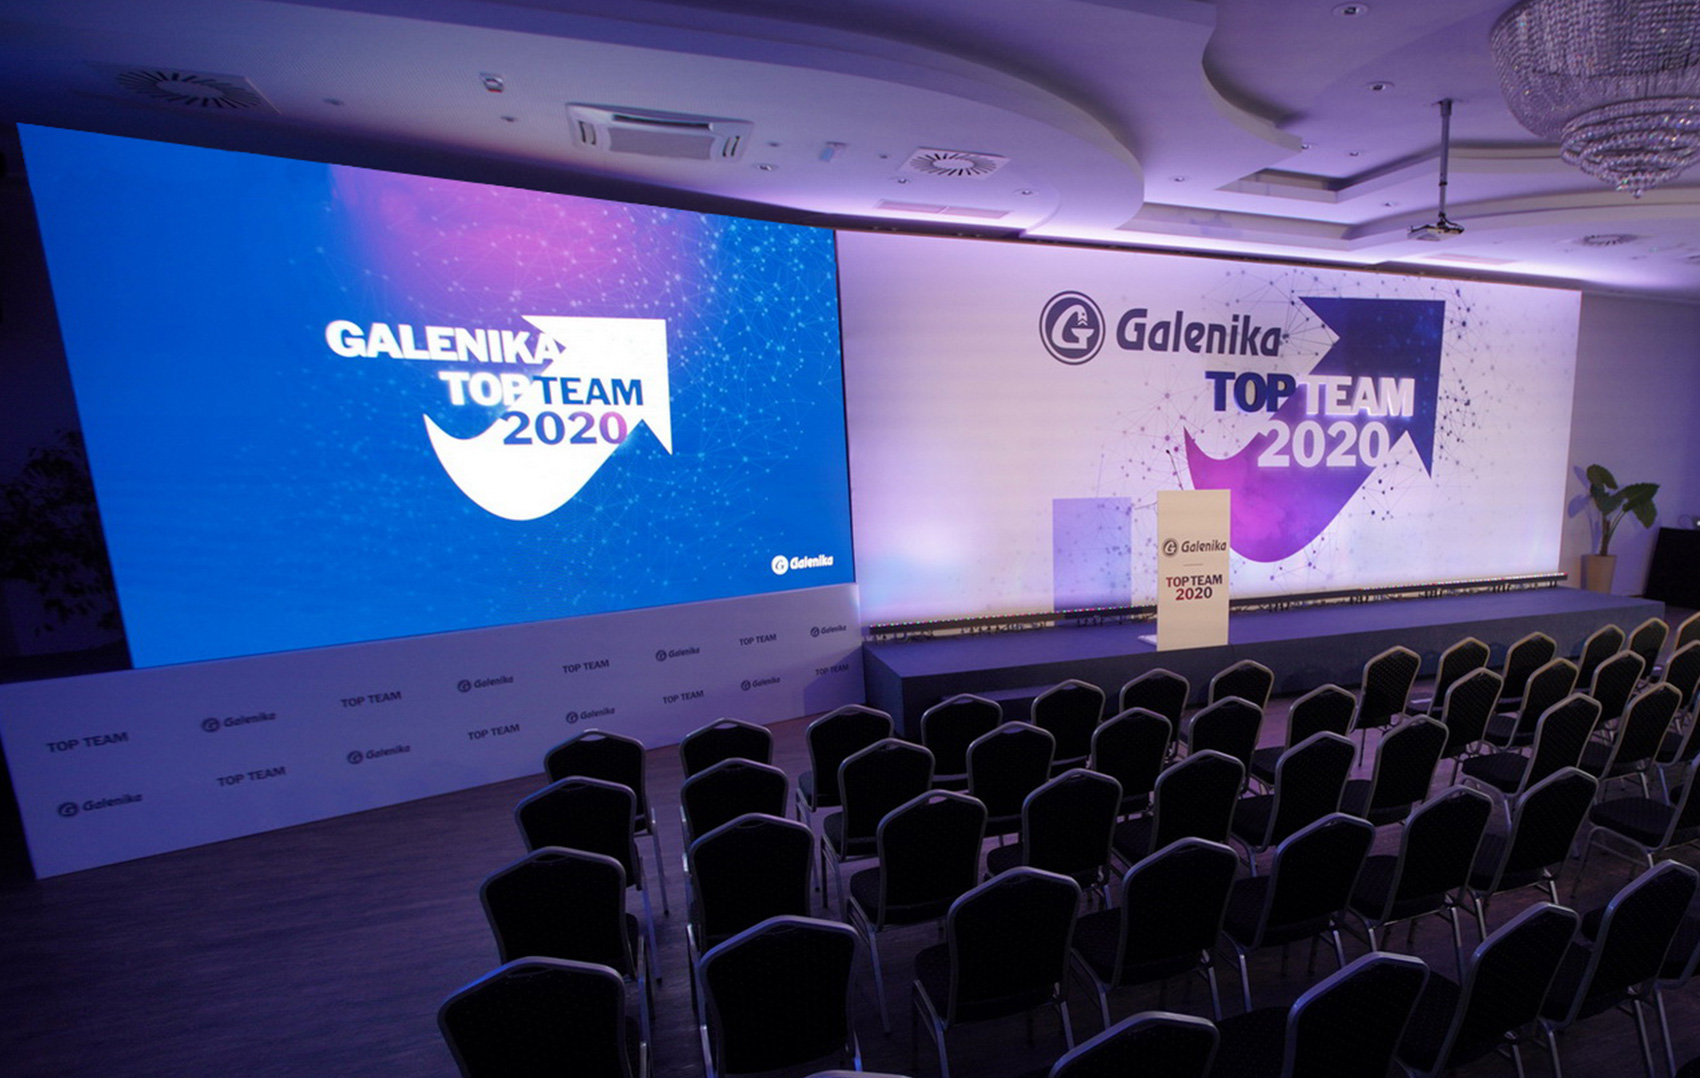 Galenika Tiop Team 2020 branding design